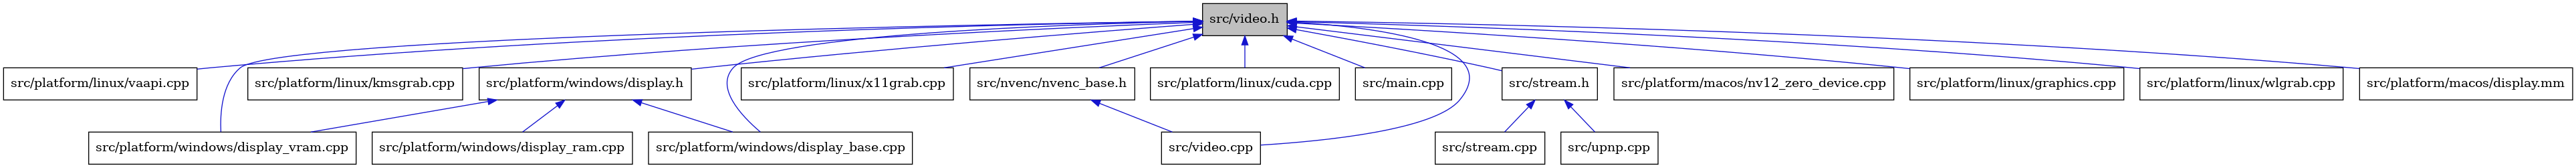 digraph {
    graph [bgcolor="#00000000"]
    node [shape=rectangle style=filled fillcolor="#FFFFFF" font=Helvetica padding=2]
    edge [color="#1414CE"]
    "18" [label="src/stream.cpp" tooltip="src/stream.cpp"]
    "8" [label="src/platform/linux/vaapi.cpp" tooltip="src/platform/linux/vaapi.cpp"]
    "3" [label="src/nvenc/nvenc_base.h" tooltip="src/nvenc/nvenc_base.h"]
    "7" [label="src/platform/linux/kmsgrab.cpp" tooltip="src/platform/linux/kmsgrab.cpp"]
    "13" [label="src/platform/windows/display.h" tooltip="src/platform/windows/display.h"]
    "19" [label="src/upnp.cpp" tooltip="src/upnp.cpp"]
    "1" [label="src/video.h" tooltip="src/video.h" fillcolor="#BFBFBF"]
    "16" [label="src/platform/windows/display_vram.cpp" tooltip="src/platform/windows/display_vram.cpp"]
    "10" [label="src/platform/linux/x11grab.cpp" tooltip="src/platform/linux/x11grab.cpp"]
    "15" [label="src/platform/windows/display_base.cpp" tooltip="src/platform/windows/display_base.cpp"]
    "14" [label="src/platform/windows/display_ram.cpp" tooltip="src/platform/windows/display_ram.cpp"]
    "6" [label="src/platform/linux/cuda.cpp" tooltip="src/platform/linux/cuda.cpp"]
    "2" [label="src/main.cpp" tooltip="src/main.cpp"]
    "17" [label="src/stream.h" tooltip="src/stream.h"]
    "4" [label="src/video.cpp" tooltip="src/video.cpp"]
    "12" [label="src/platform/macos/nv12_zero_device.cpp" tooltip="src/platform/macos/nv12_zero_device.cpp"]
    "5" [label="src/platform/linux/graphics.cpp" tooltip="src/platform/linux/graphics.cpp"]
    "9" [label="src/platform/linux/wlgrab.cpp" tooltip="src/platform/linux/wlgrab.cpp"]
    "11" [label="src/platform/macos/display.mm" tooltip="src/platform/macos/display.mm"]
    "3" -> "4" [dir=back tooltip="include"]
    "13" -> "14" [dir=back tooltip="include"]
    "13" -> "15" [dir=back tooltip="include"]
    "13" -> "16" [dir=back tooltip="include"]
    "1" -> "2" [dir=back tooltip="include"]
    "1" -> "3" [dir=back tooltip="include"]
    "1" -> "5" [dir=back tooltip="include"]
    "1" -> "6" [dir=back tooltip="include"]
    "1" -> "7" [dir=back tooltip="include"]
    "1" -> "8" [dir=back tooltip="include"]
    "1" -> "9" [dir=back tooltip="include"]
    "1" -> "10" [dir=back tooltip="include"]
    "1" -> "11" [dir=back tooltip="include"]
    "1" -> "12" [dir=back tooltip="include"]
    "1" -> "13" [dir=back tooltip="include"]
    "1" -> "15" [dir=back tooltip="include"]
    "1" -> "16" [dir=back tooltip="include"]
    "1" -> "17" [dir=back tooltip="include"]
    "1" -> "4" [dir=back tooltip="include"]
    "17" -> "18" [dir=back tooltip="include"]
    "17" -> "19" [dir=back tooltip="include"]
}